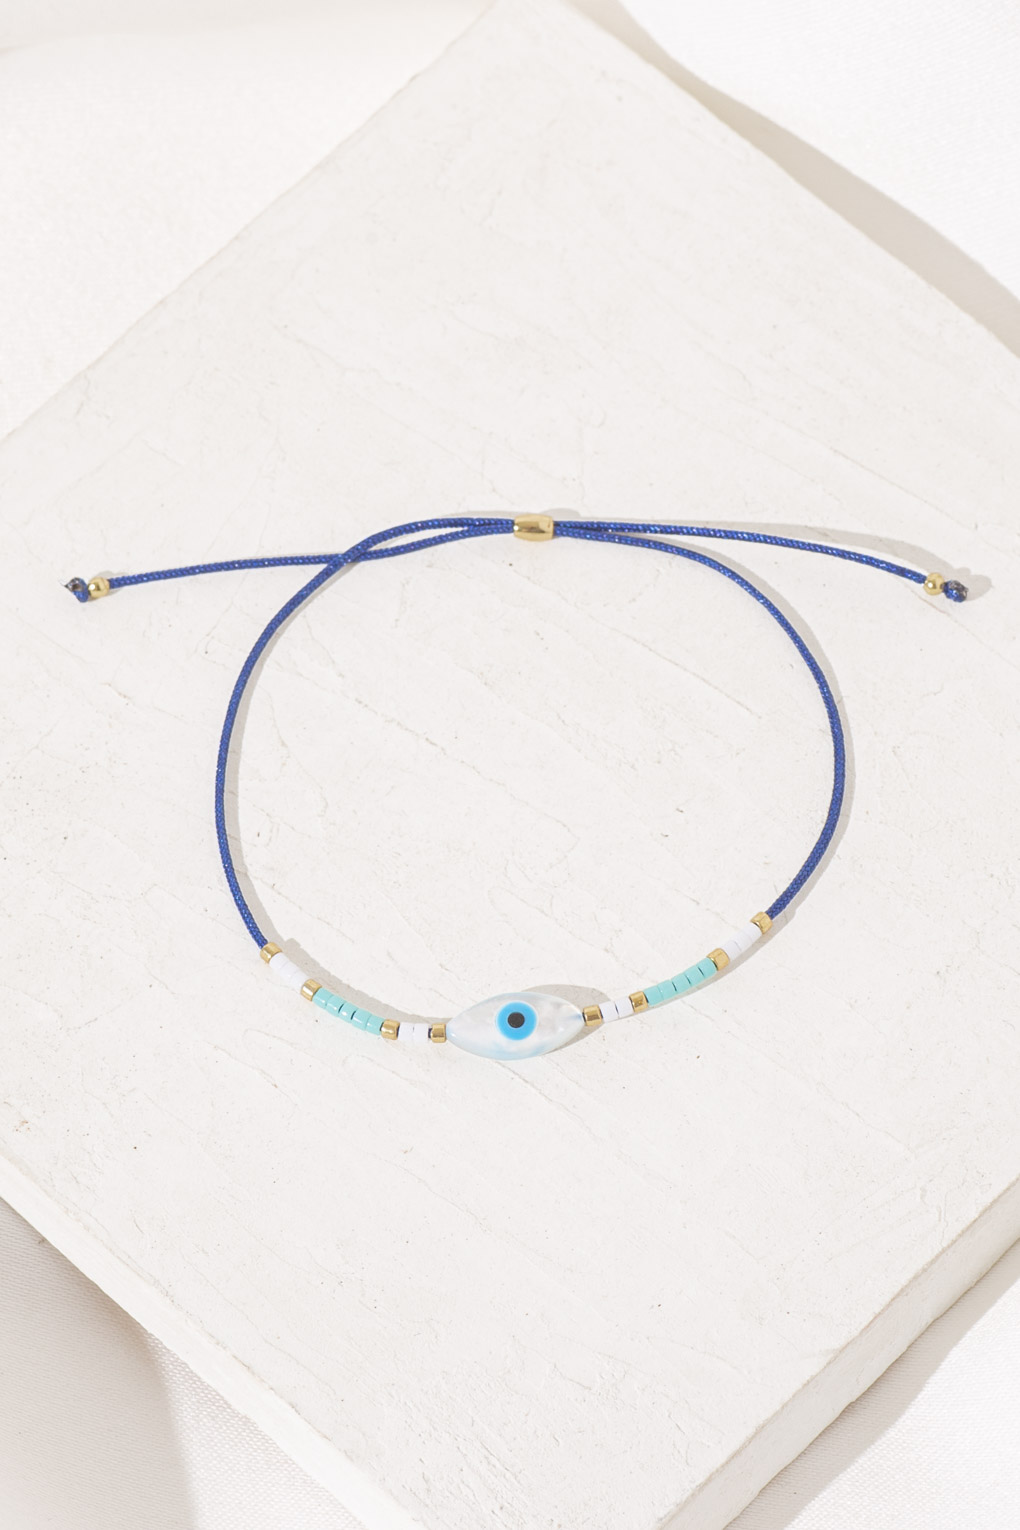 bracelet Magia bleu marine doré de Shlomit Ofir